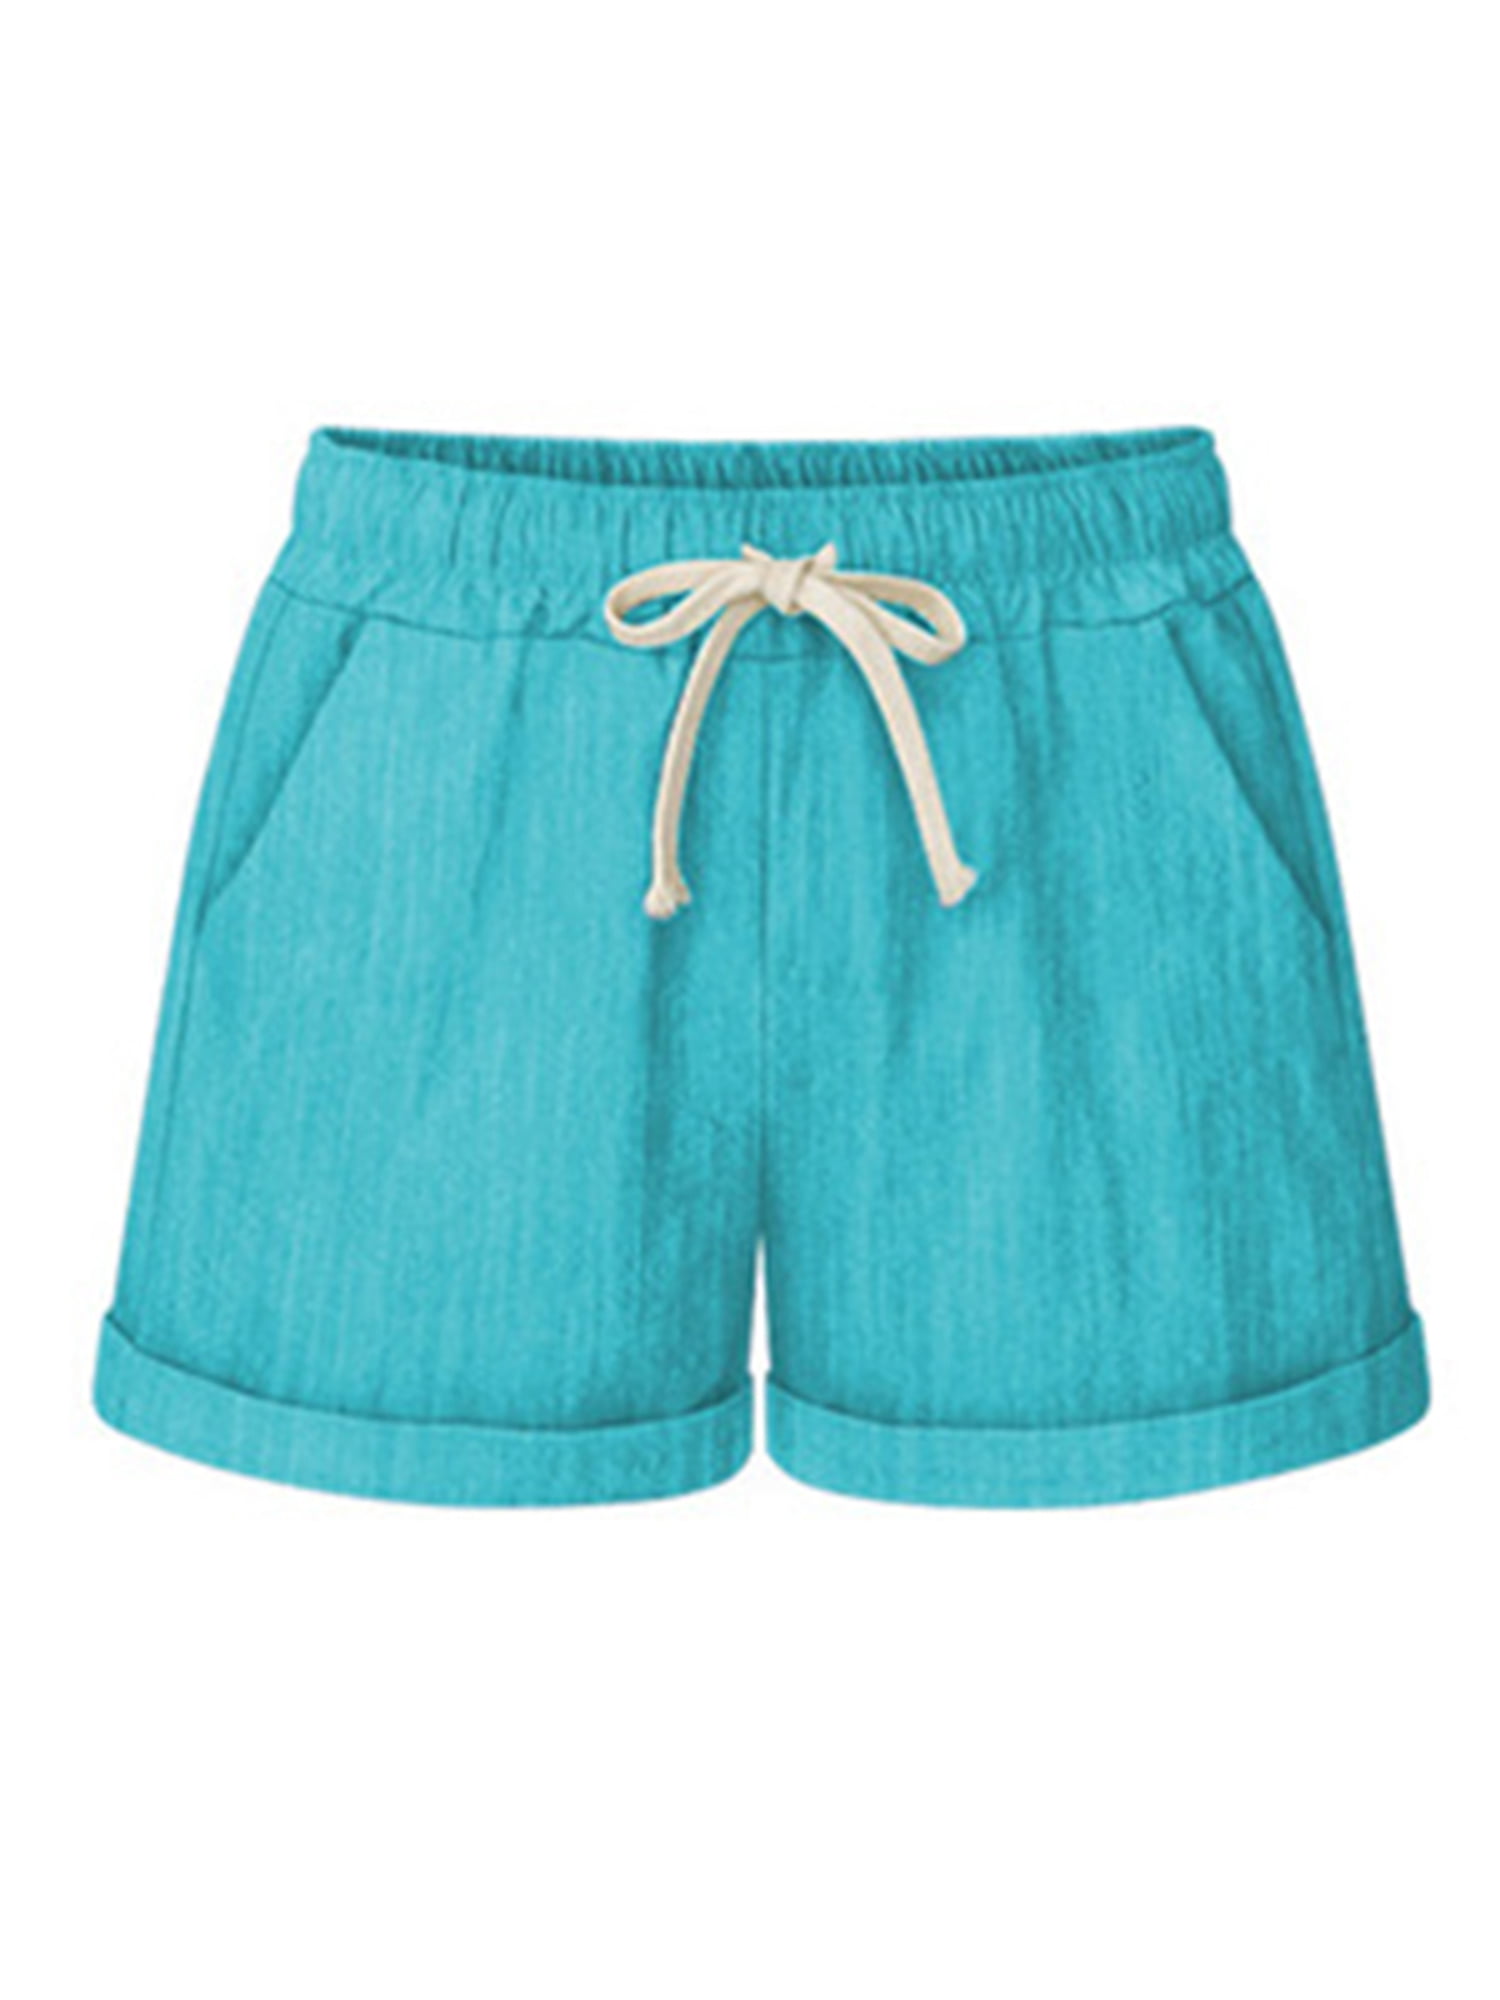 Msmsse Plus Size Shorts Summer Causal Elastic Waist Shorts for Women